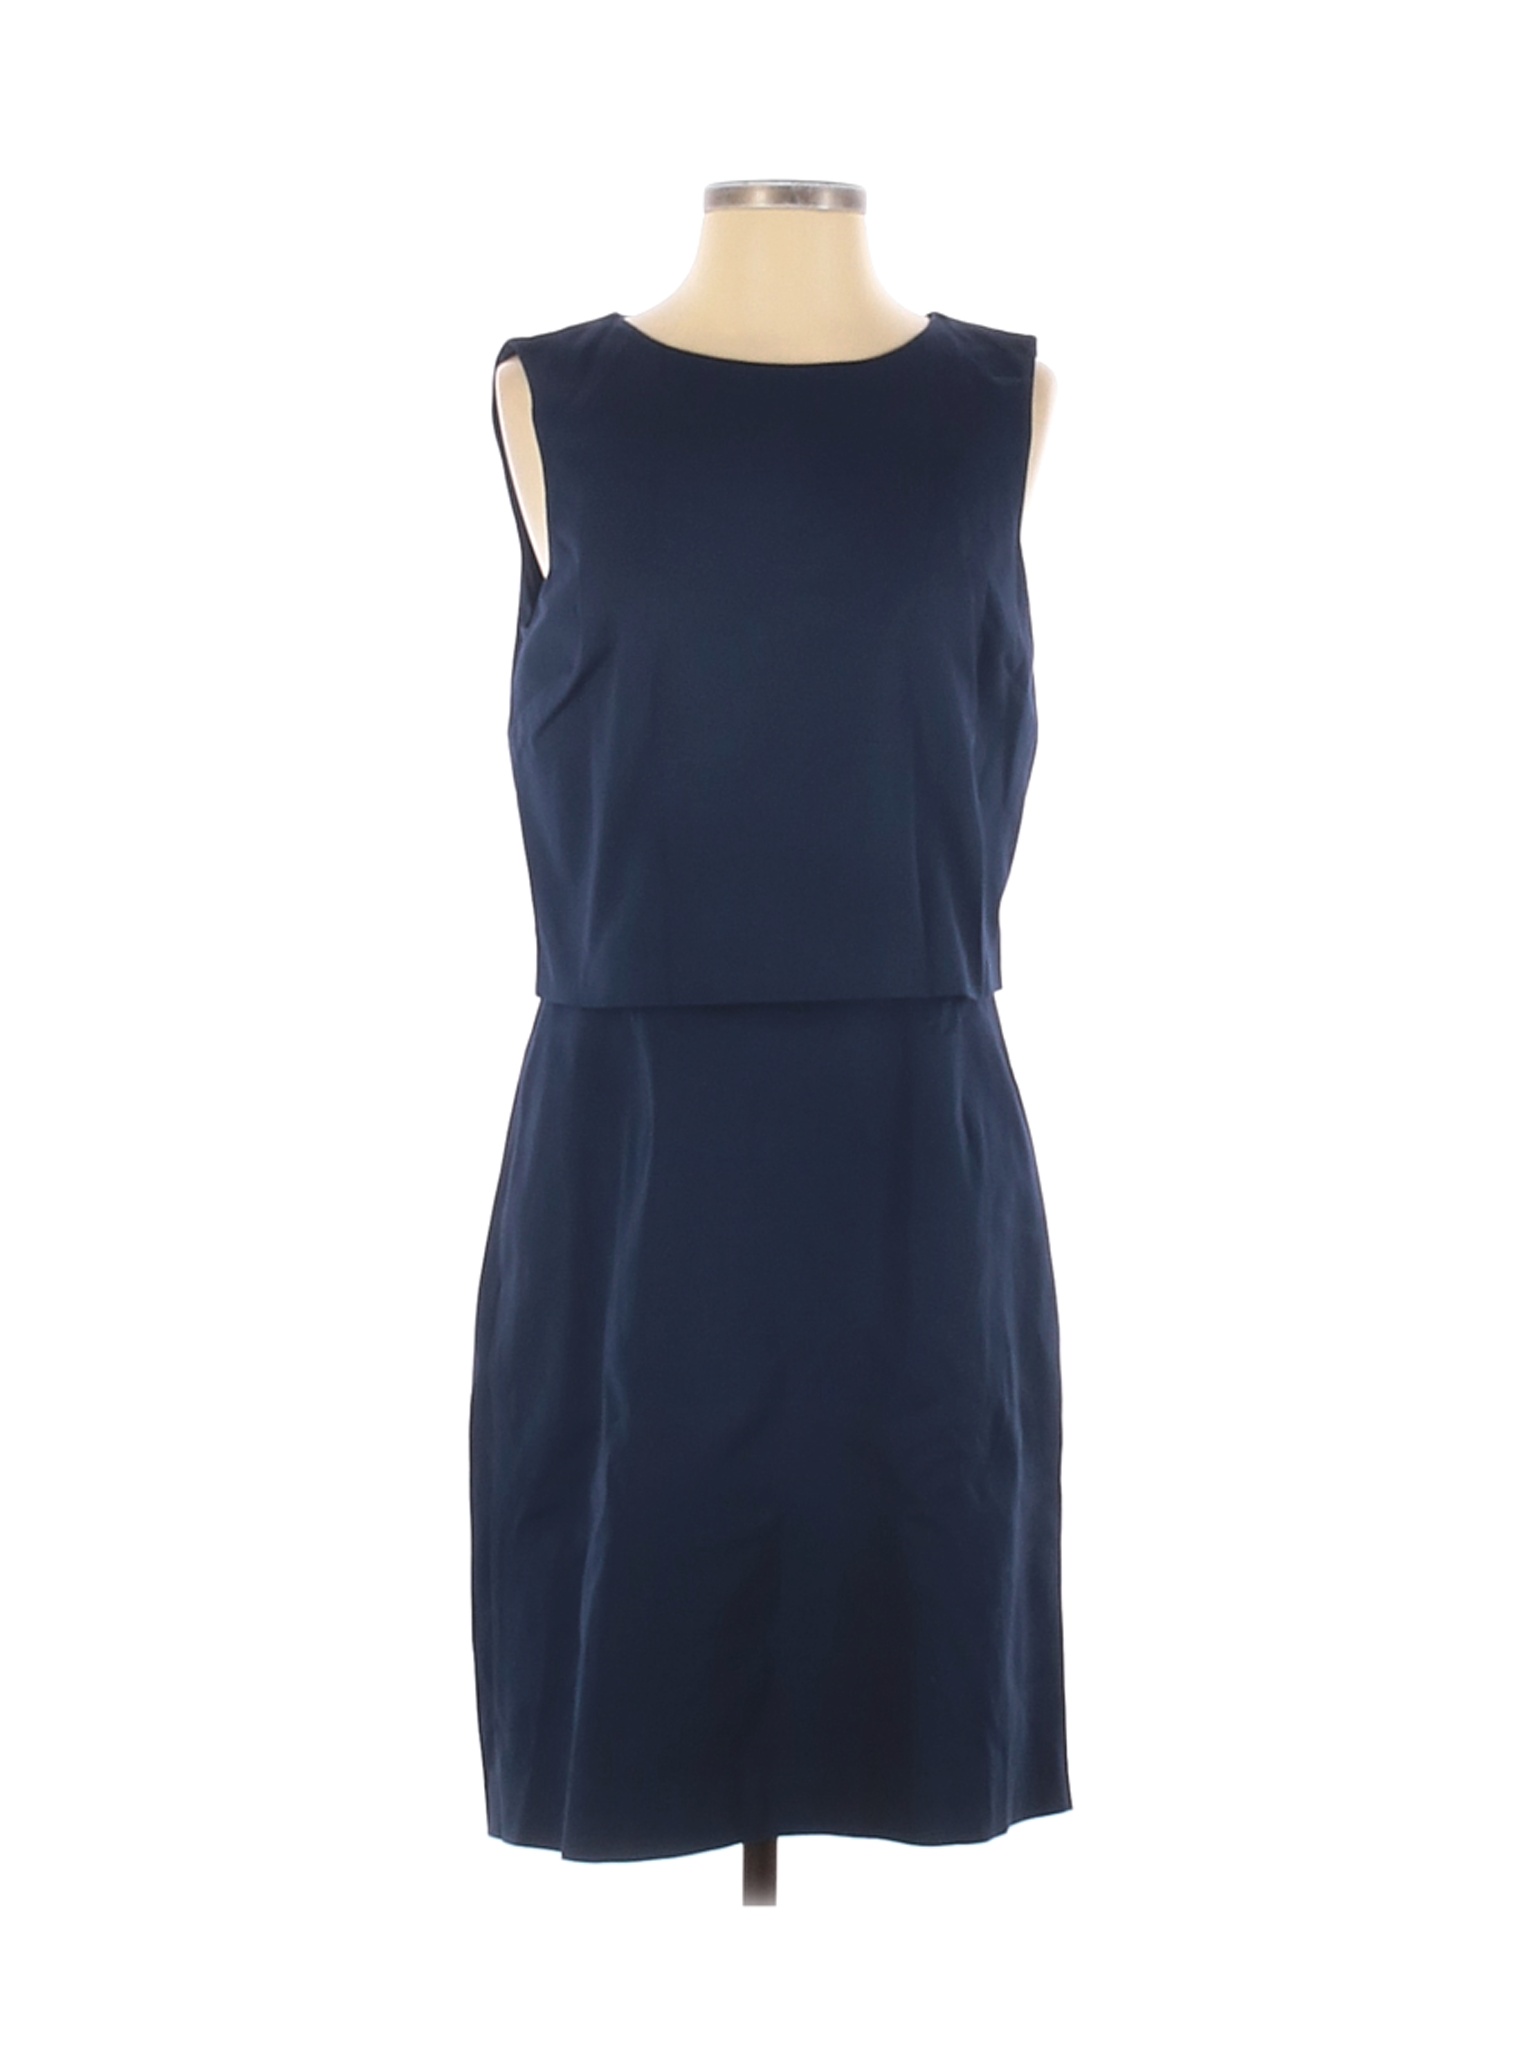 NWT Brooks Brothers Women Blue Casual Dress 8 | eBay